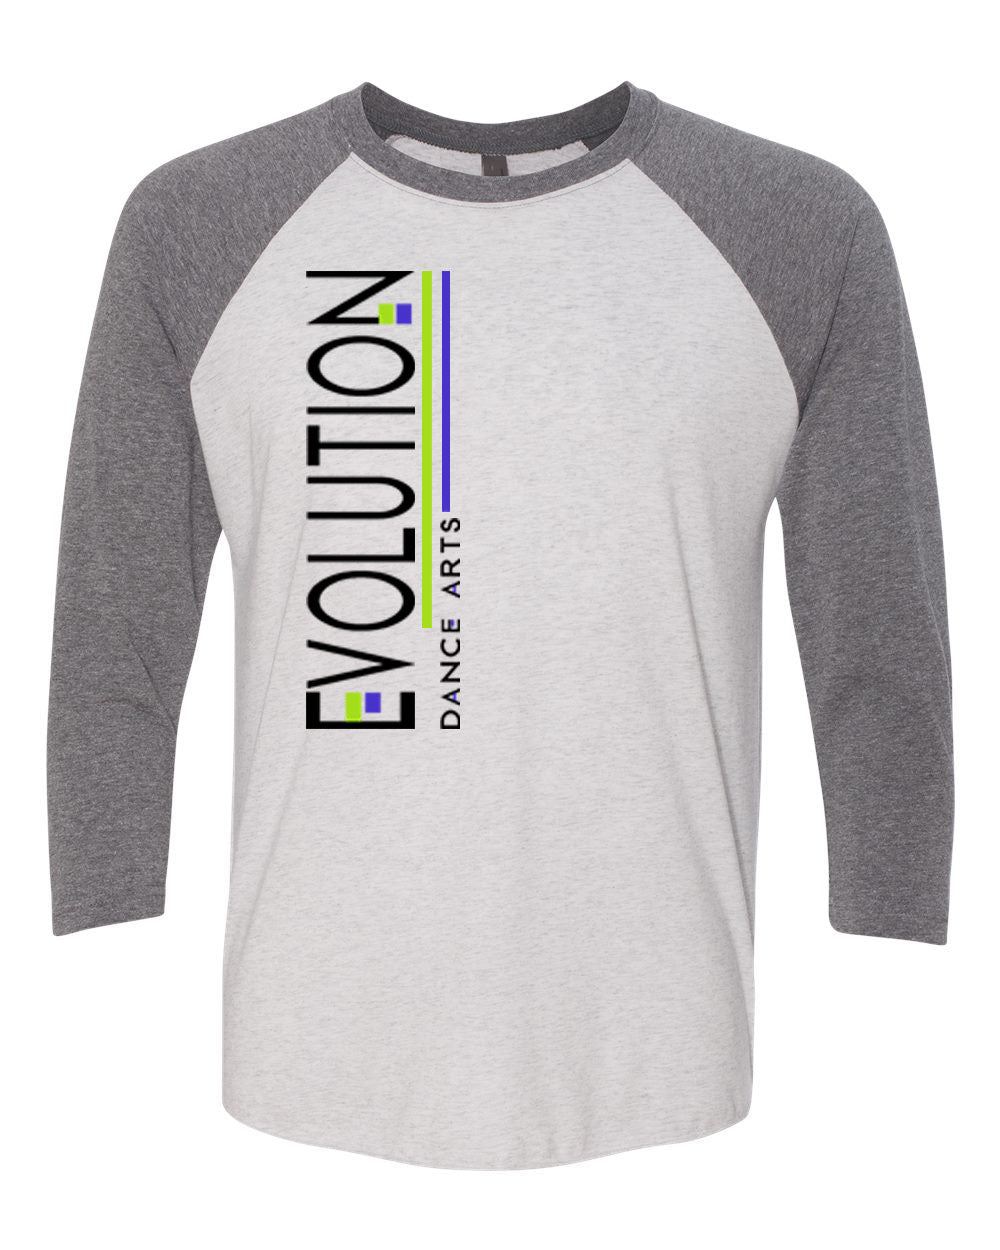 Evolution Dance Arts design 5 raglan shirt